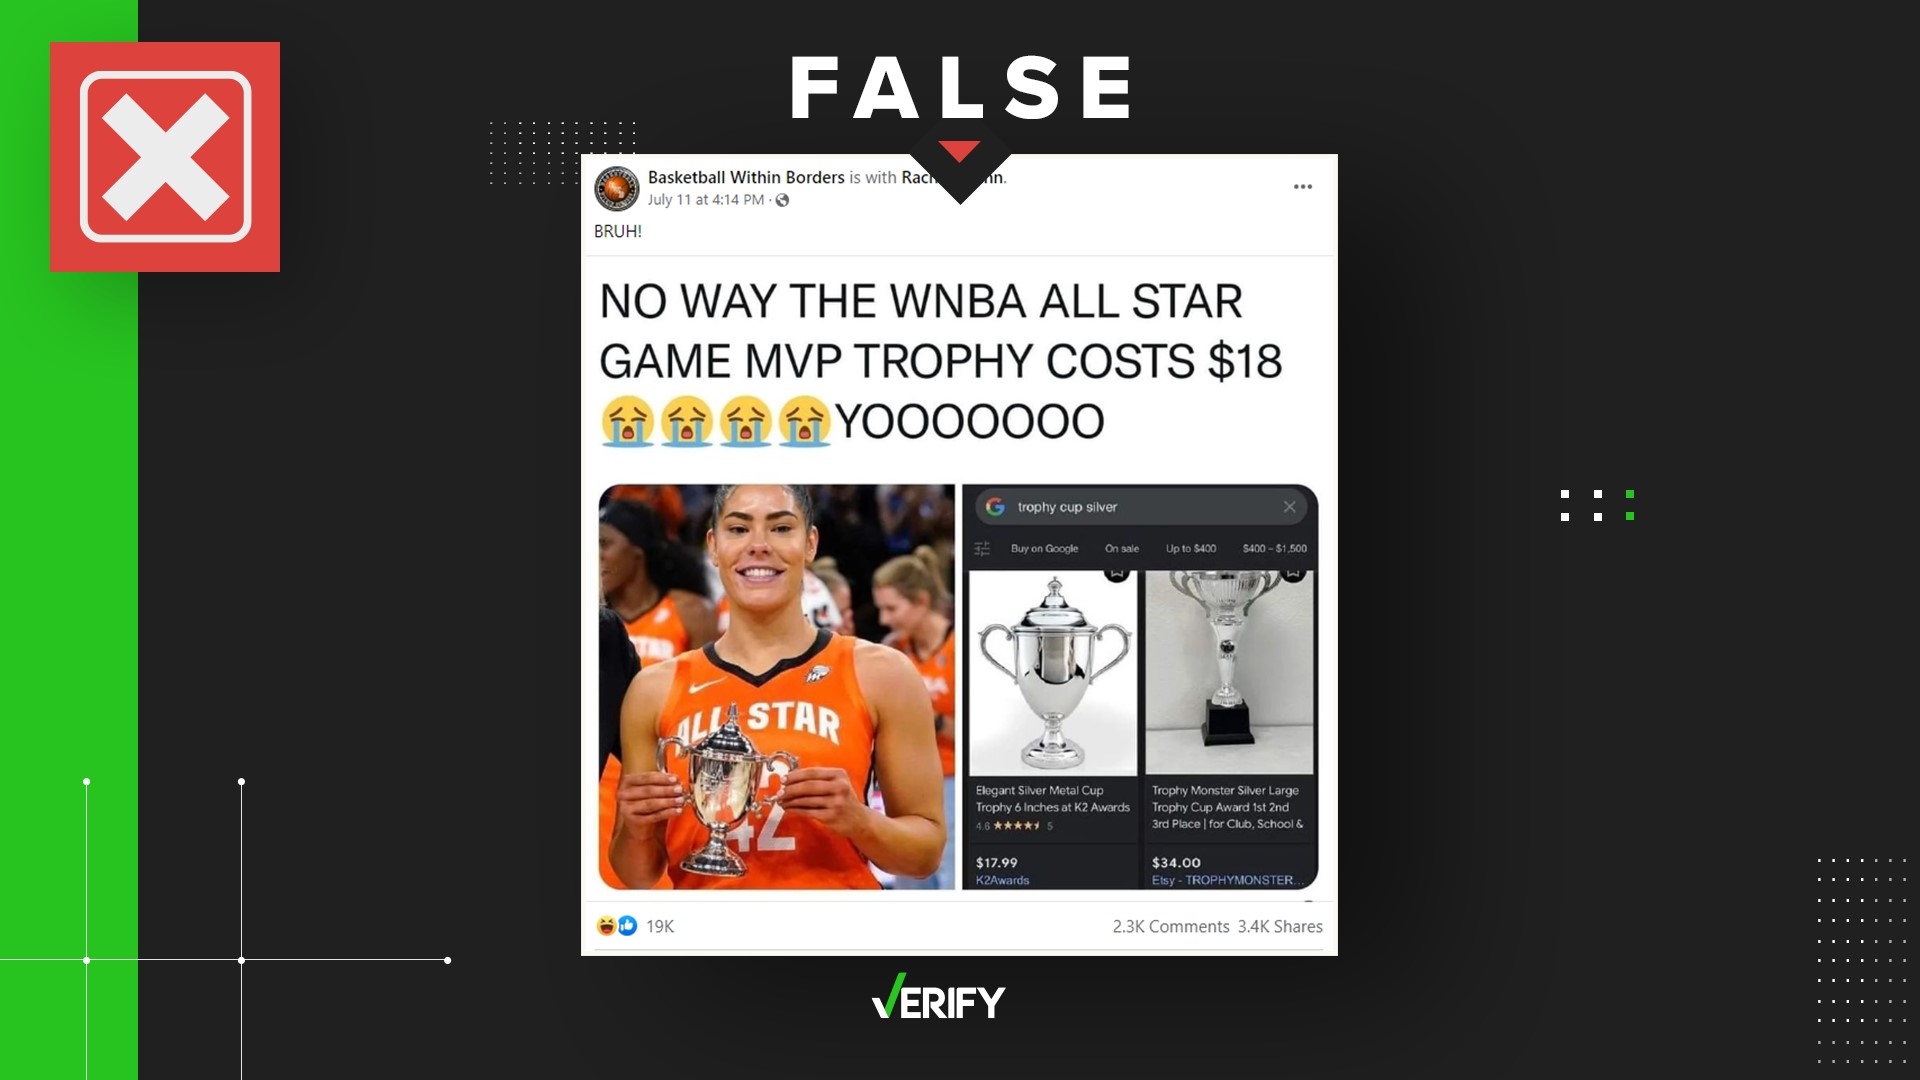 A viral social media post claimed the WNBA awarded All-Star MVP Kelsey Plum an $18 trophy. That’s false.